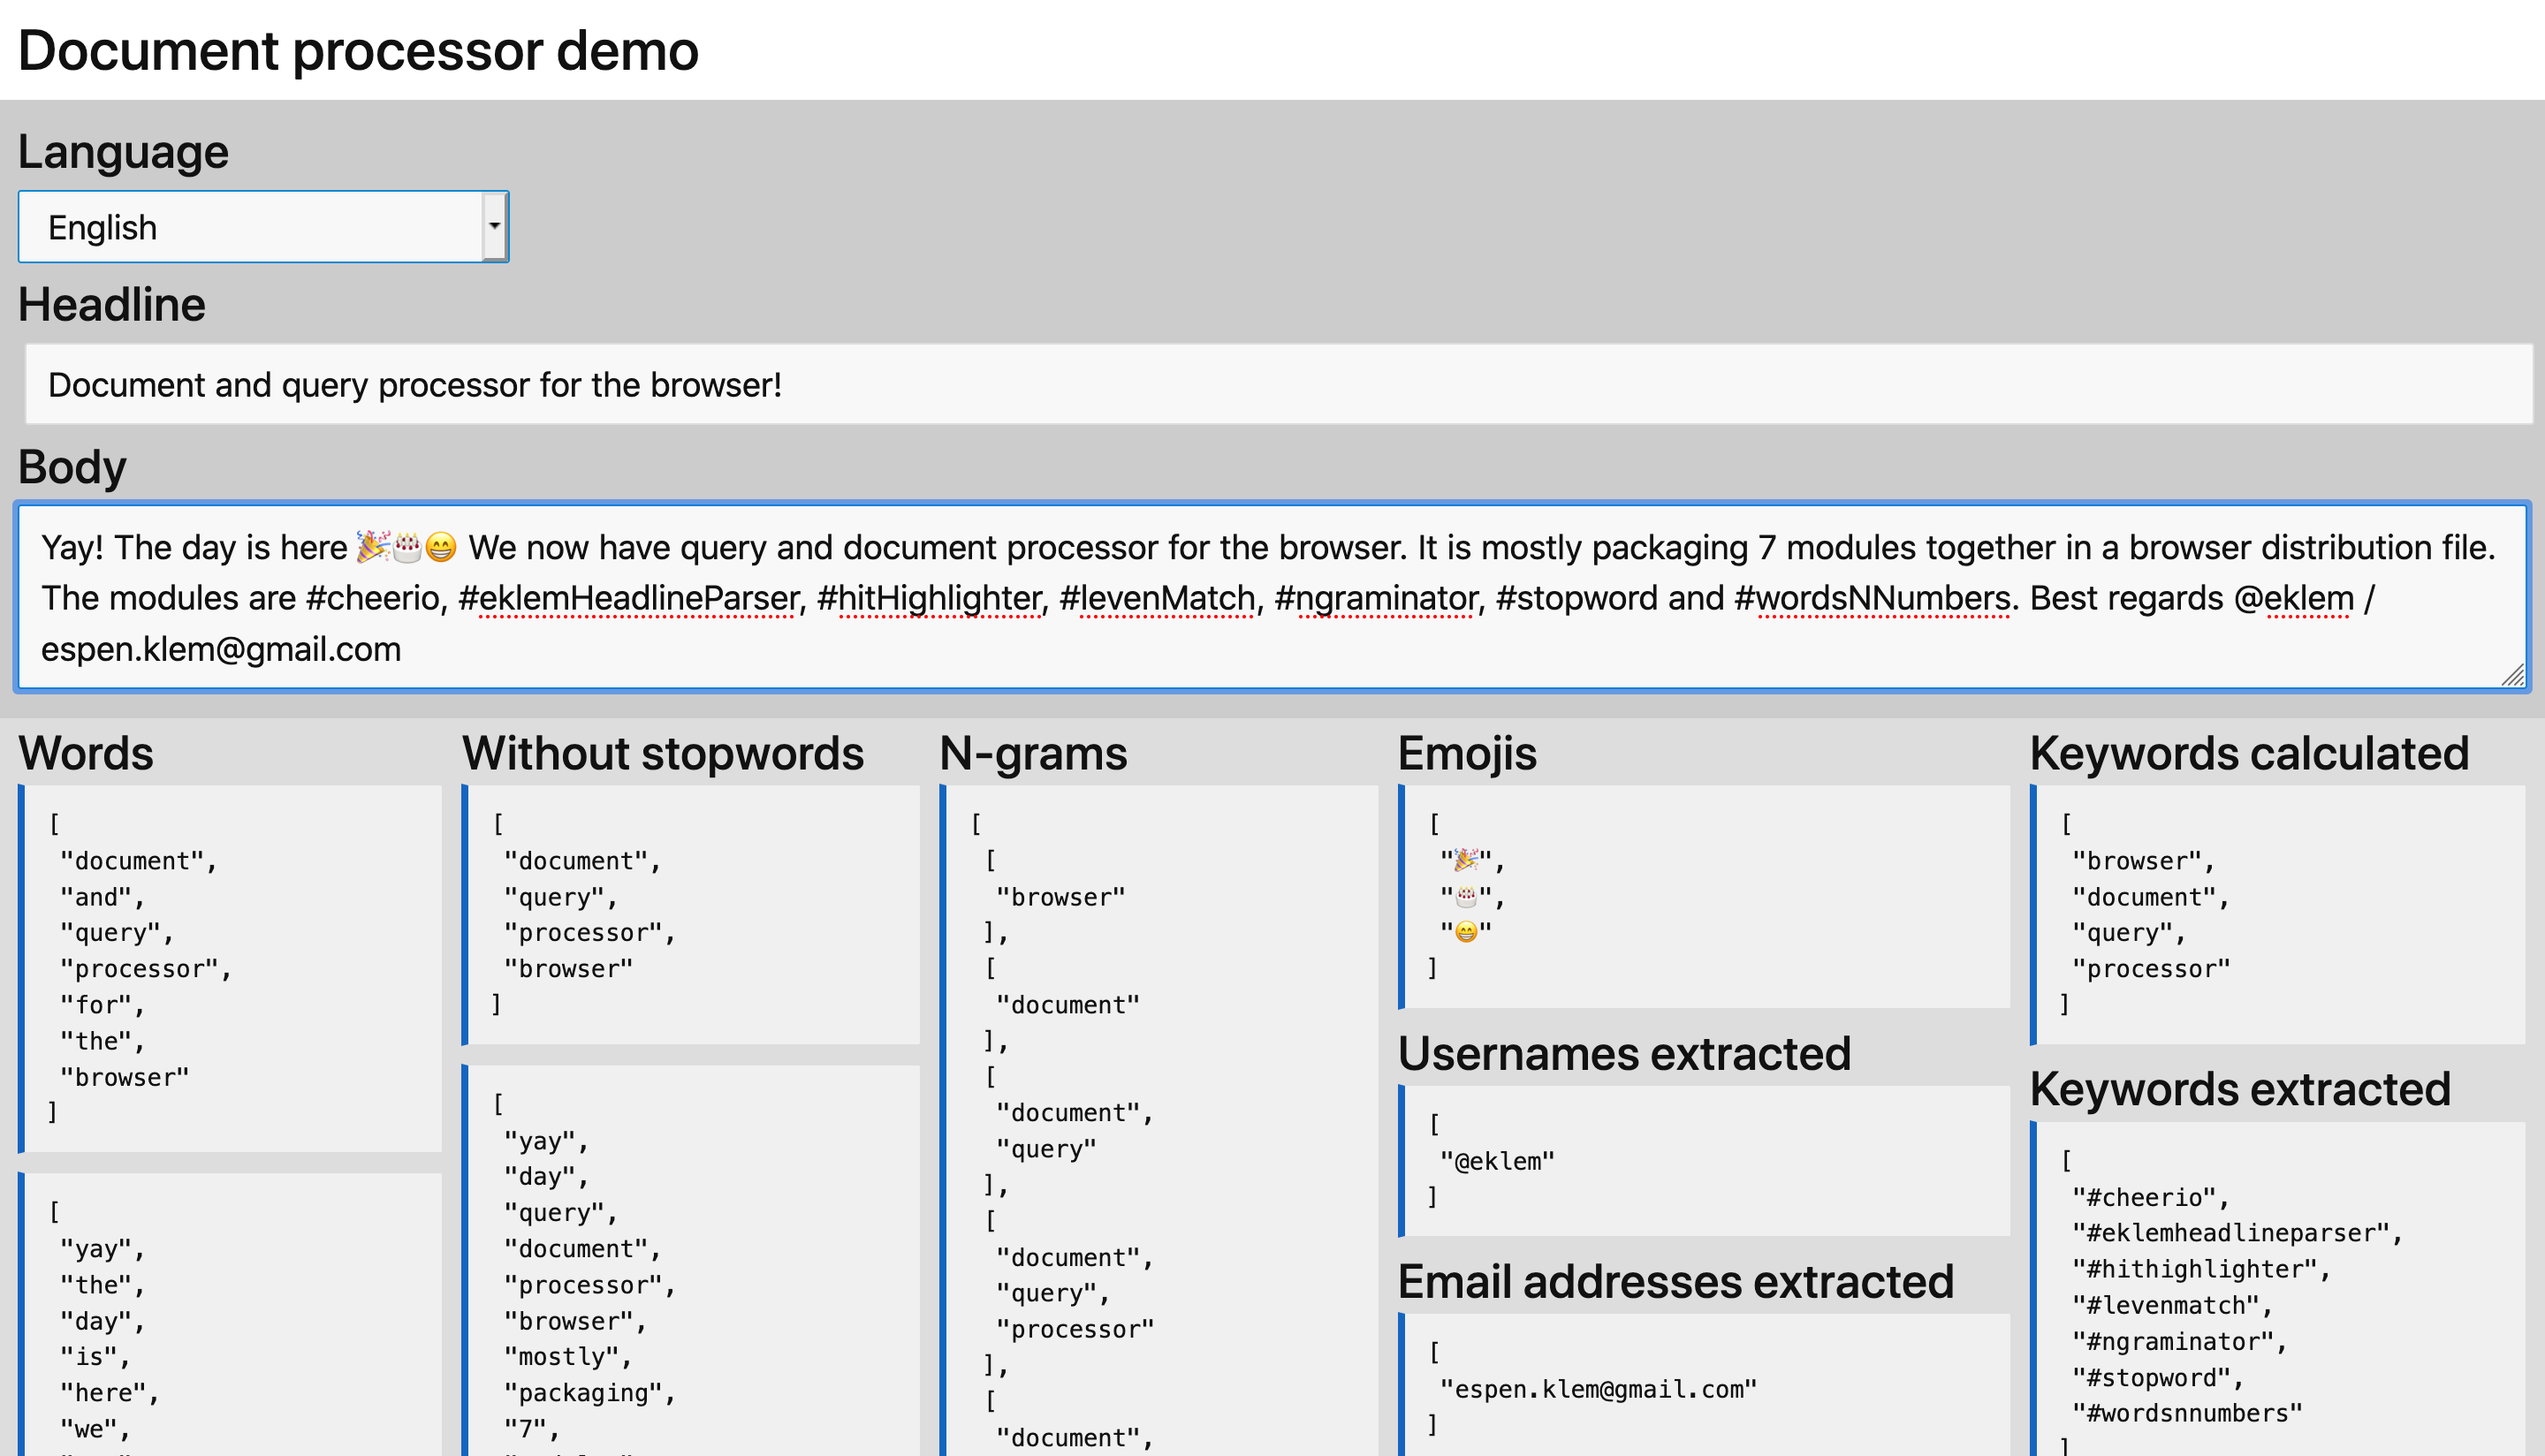 Screenshot of the daq-proc document processor demo